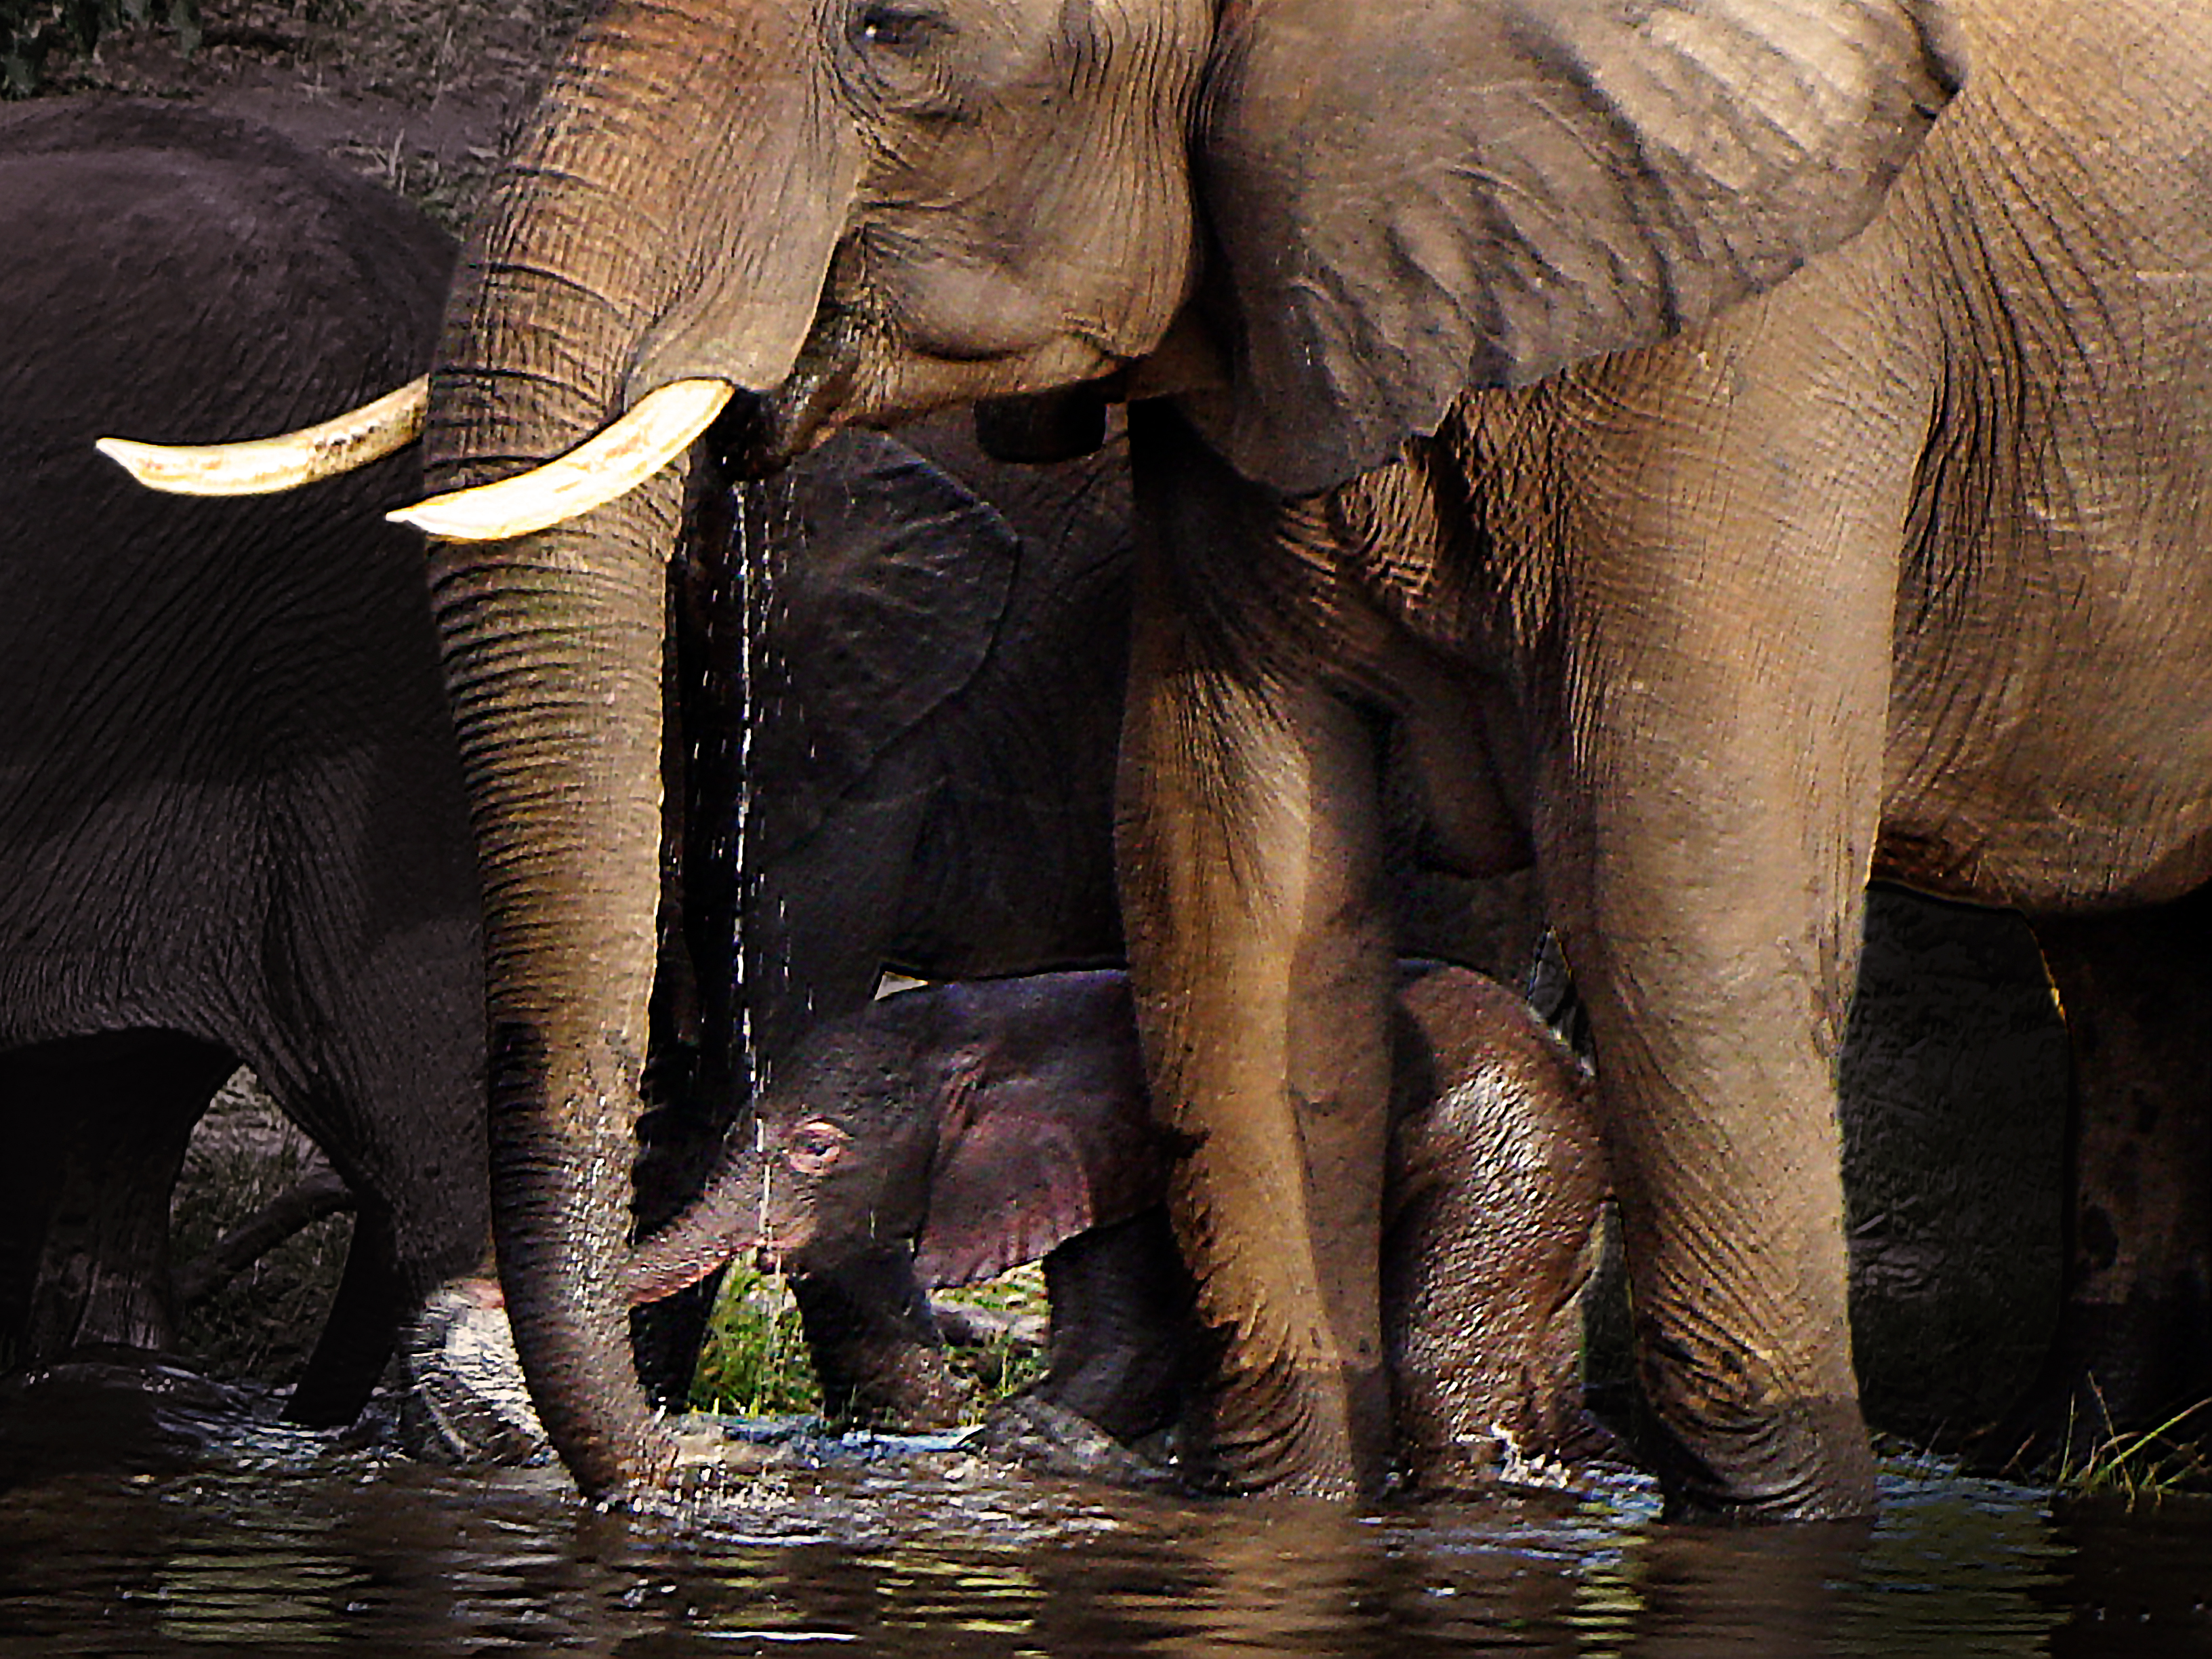 hk_c_錢萍-呵護-一隻剛出生十天的象寶寶被父母親帶着來到喬貝河裡洗澡，象爸爸用粗壯的前肢和象鼻緊緊呵護着小BB。本人拍攝於非洲博茨瓦納喬貝國家公園內.jpeg